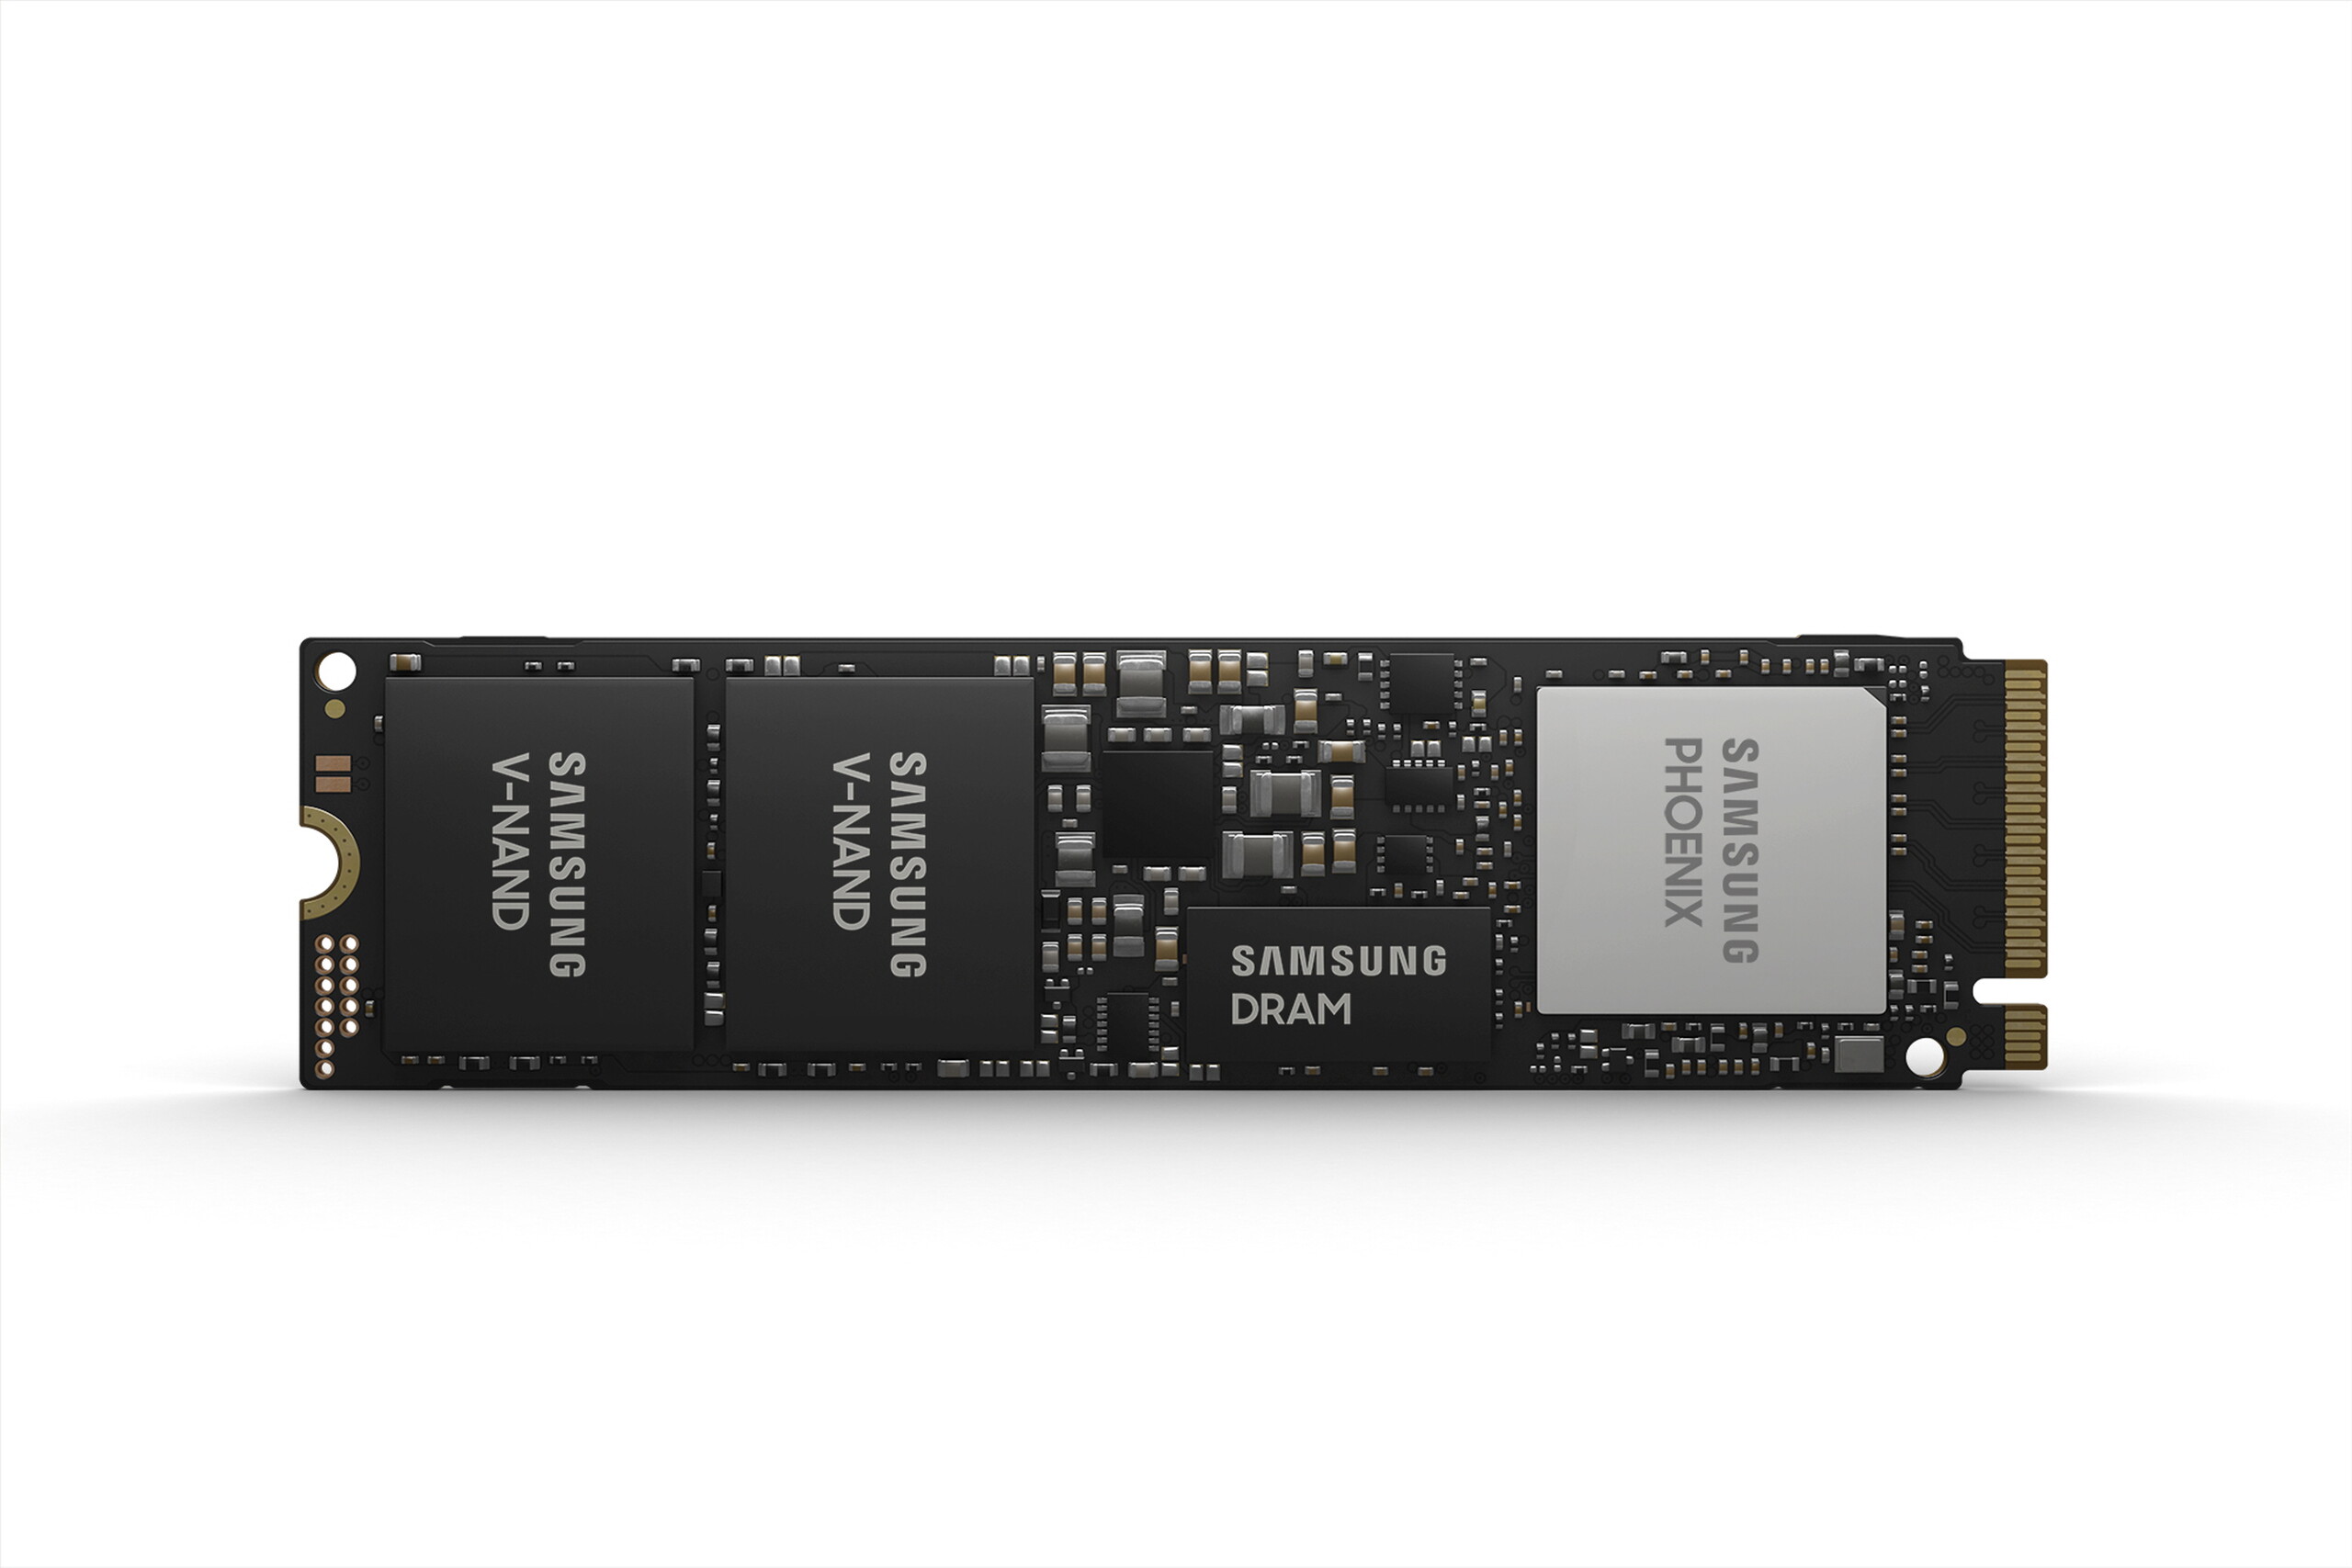 Samsung 970 Evo Plus SSD (NVMe, M.2) Review -  Reviews